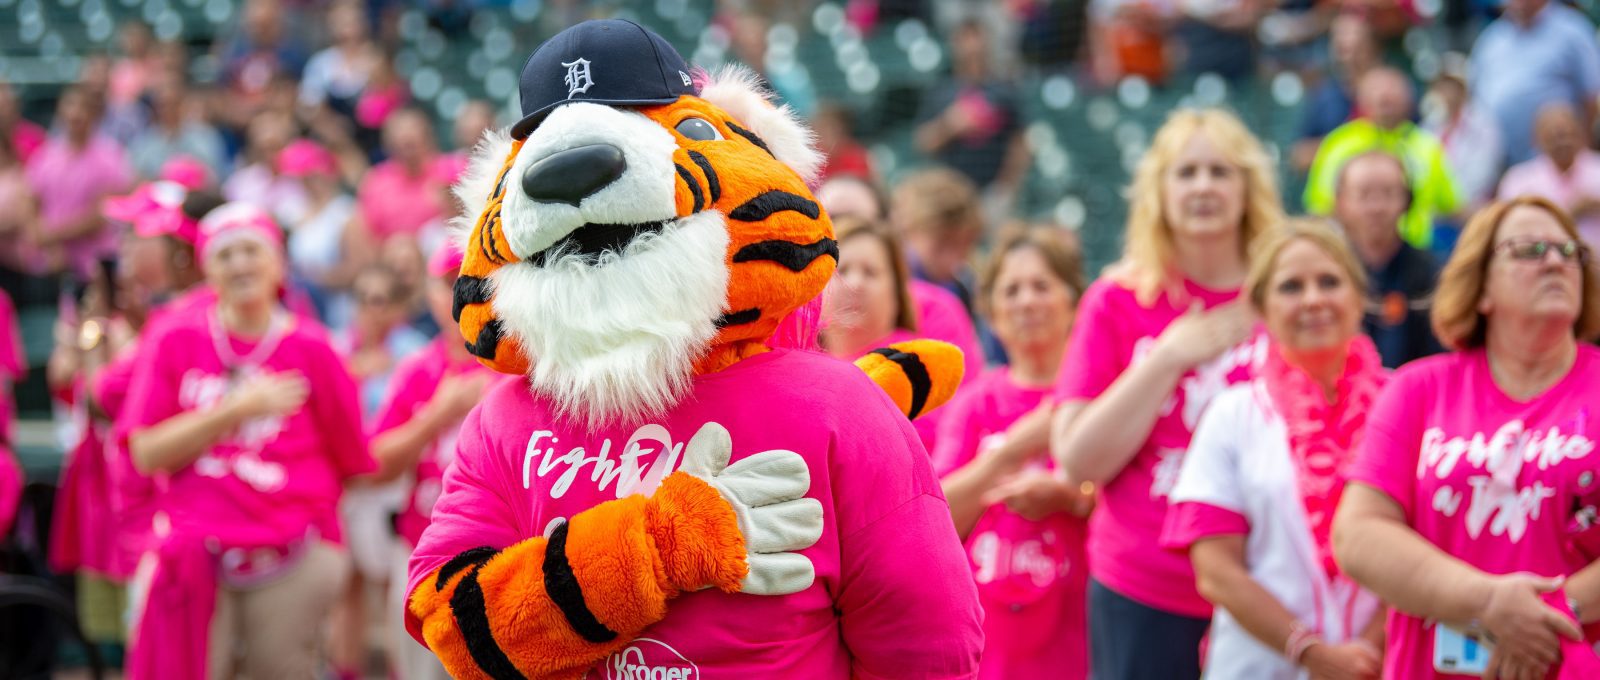 Detroit Tigers Pink Pet Jersey